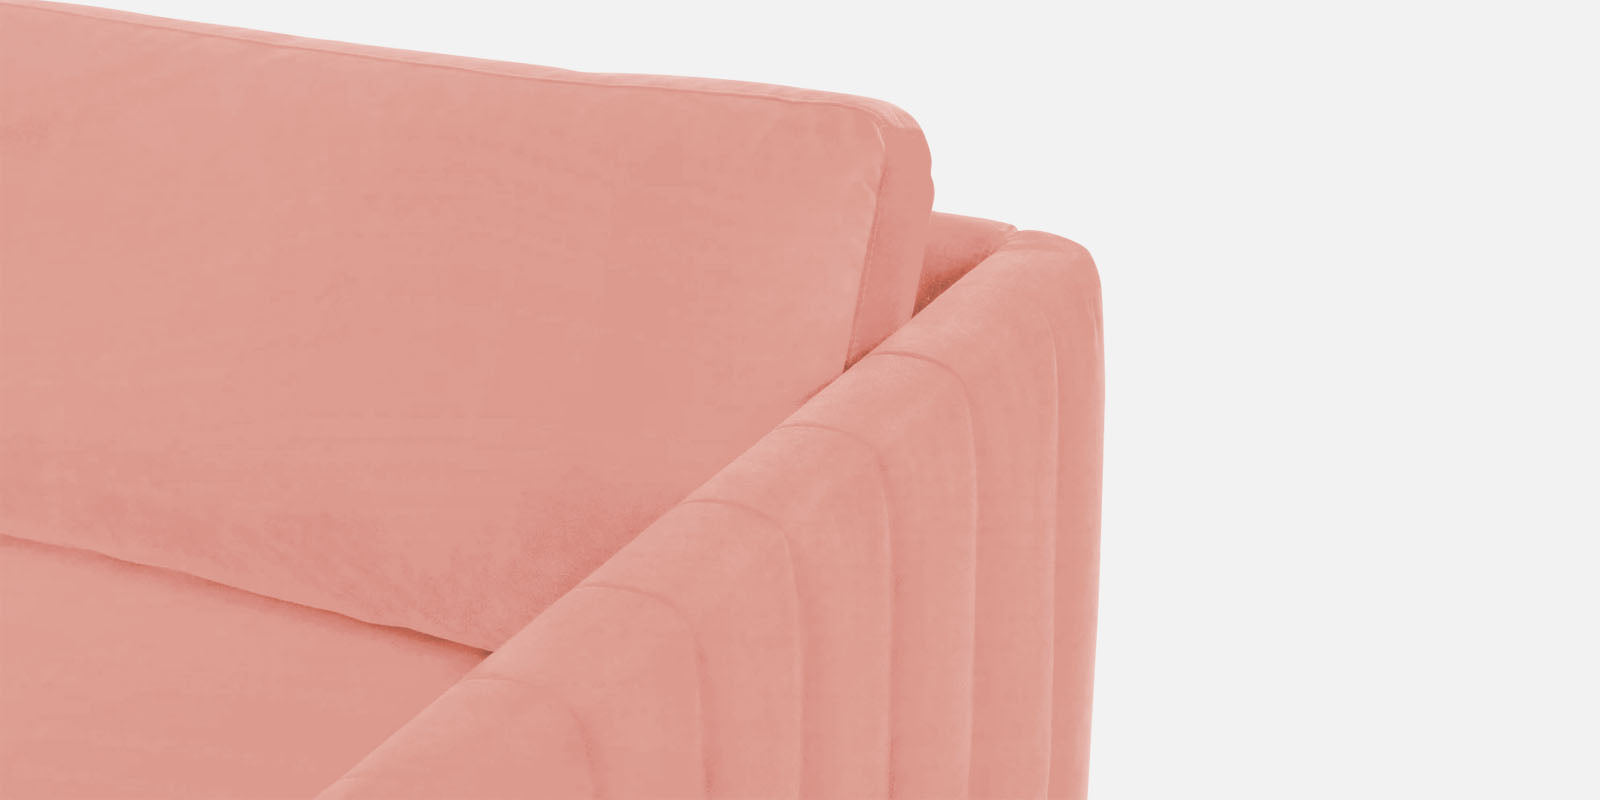 Haru Velvet 3 Seater Sofa in Blush Pink Colour